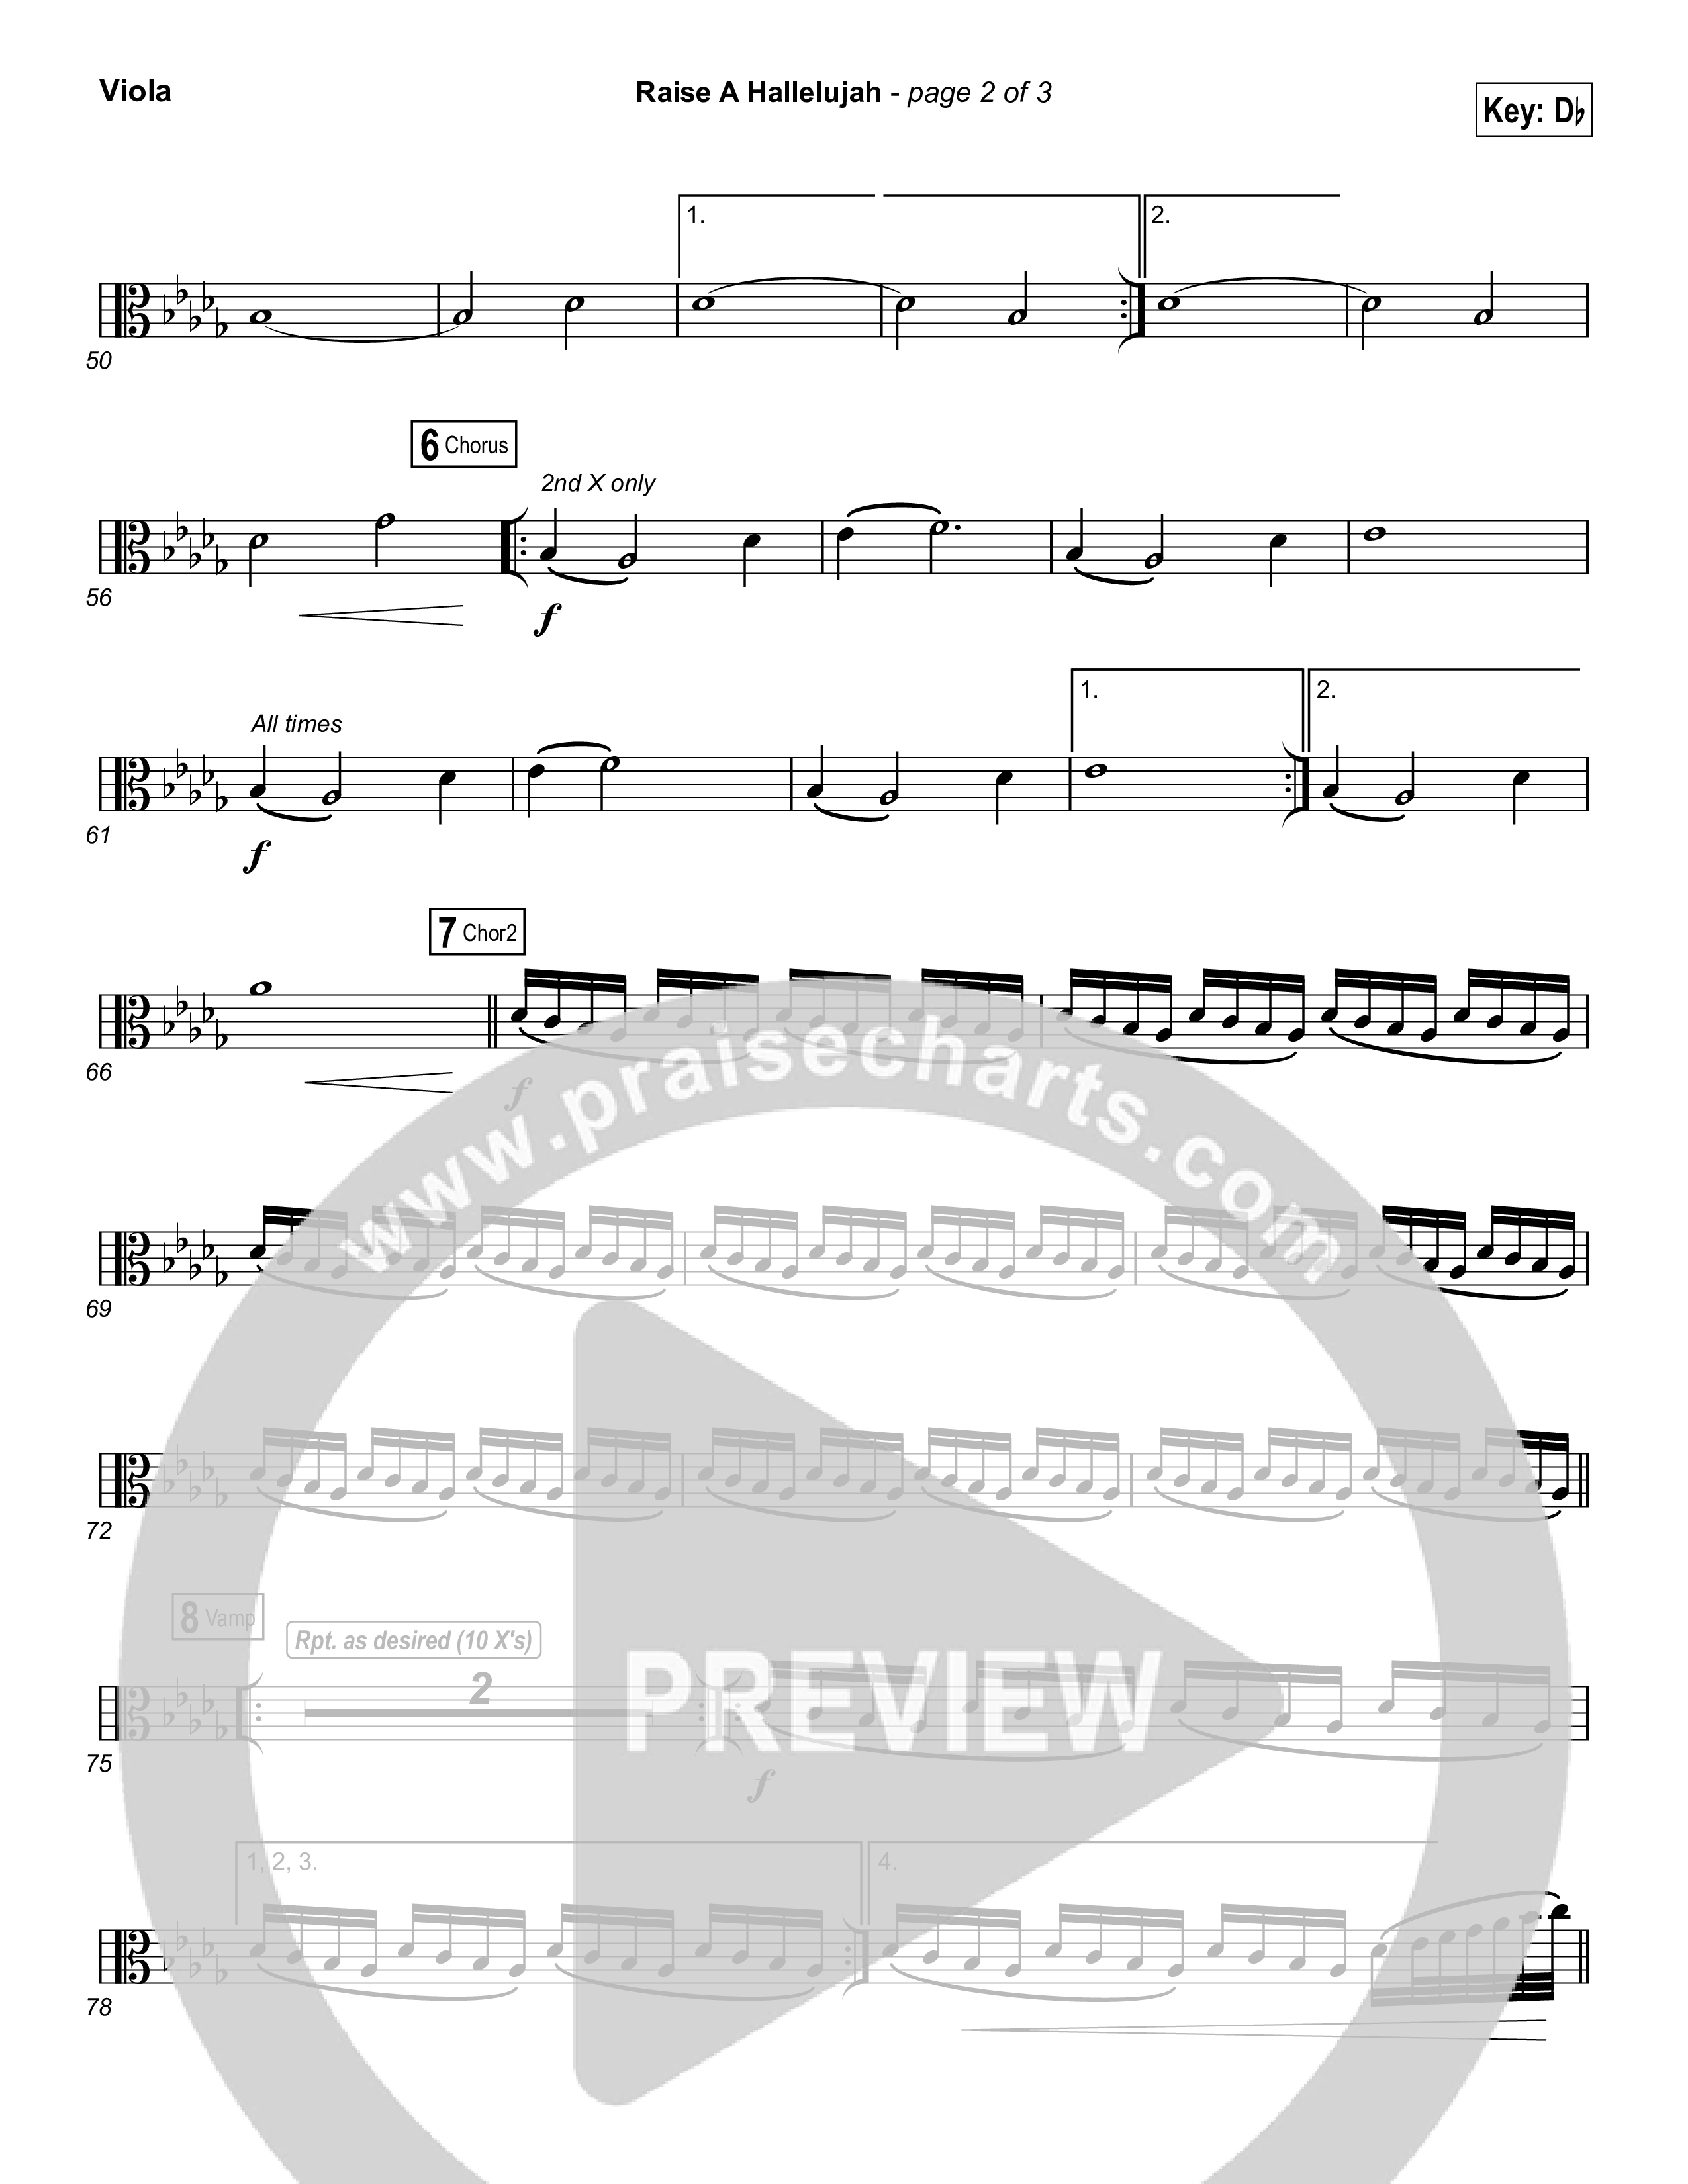 Raise A Hallelujah (Choral Anthem SATB) Viola (Bethel Music / Arr. Luke Gambill)